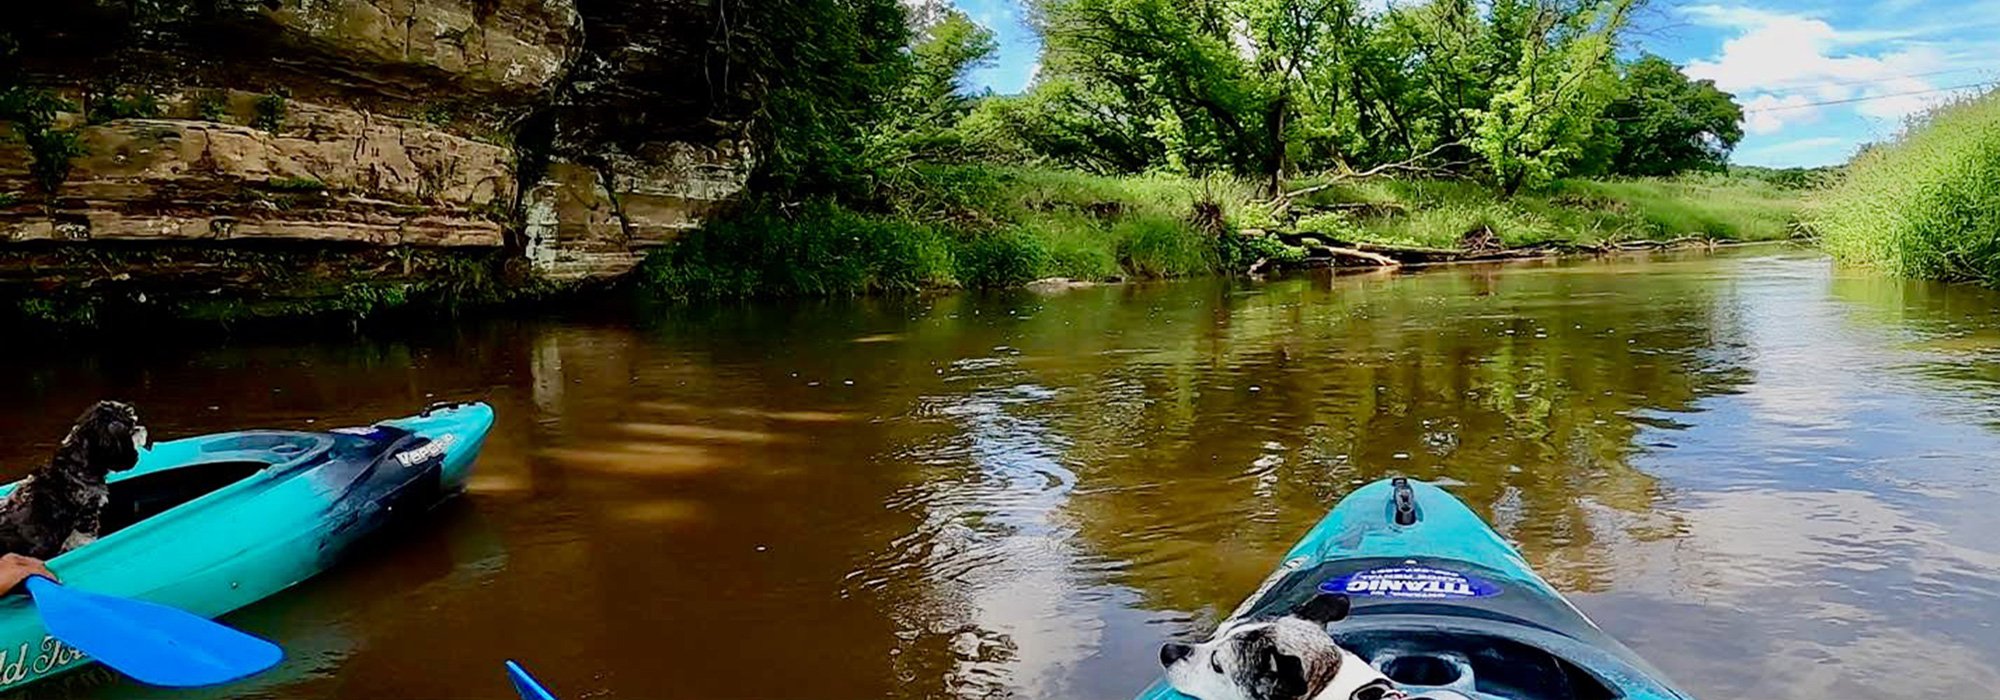 Rental Rates for Canoeing, Kayaking, Tubing on the Kickapoo River, Ontario, WI